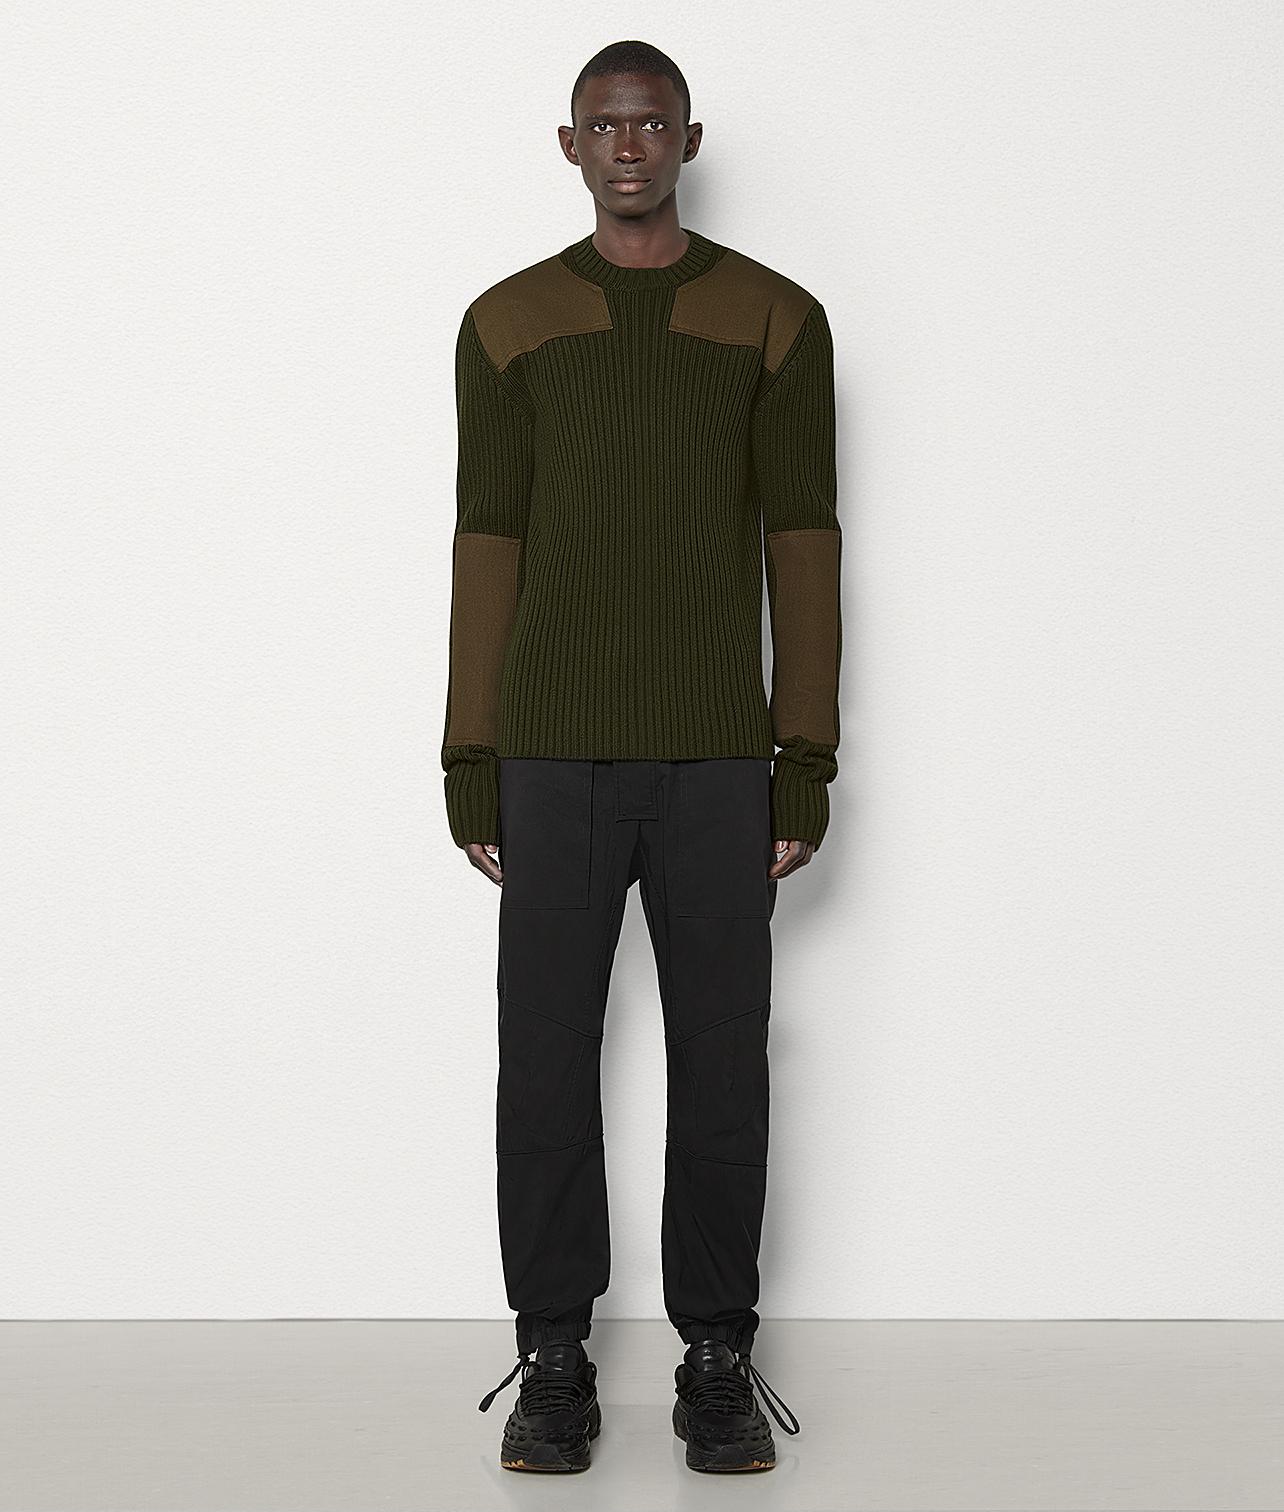 Bottega Veneta Sweater In Wool in Military Green (Green) for Men - Lyst